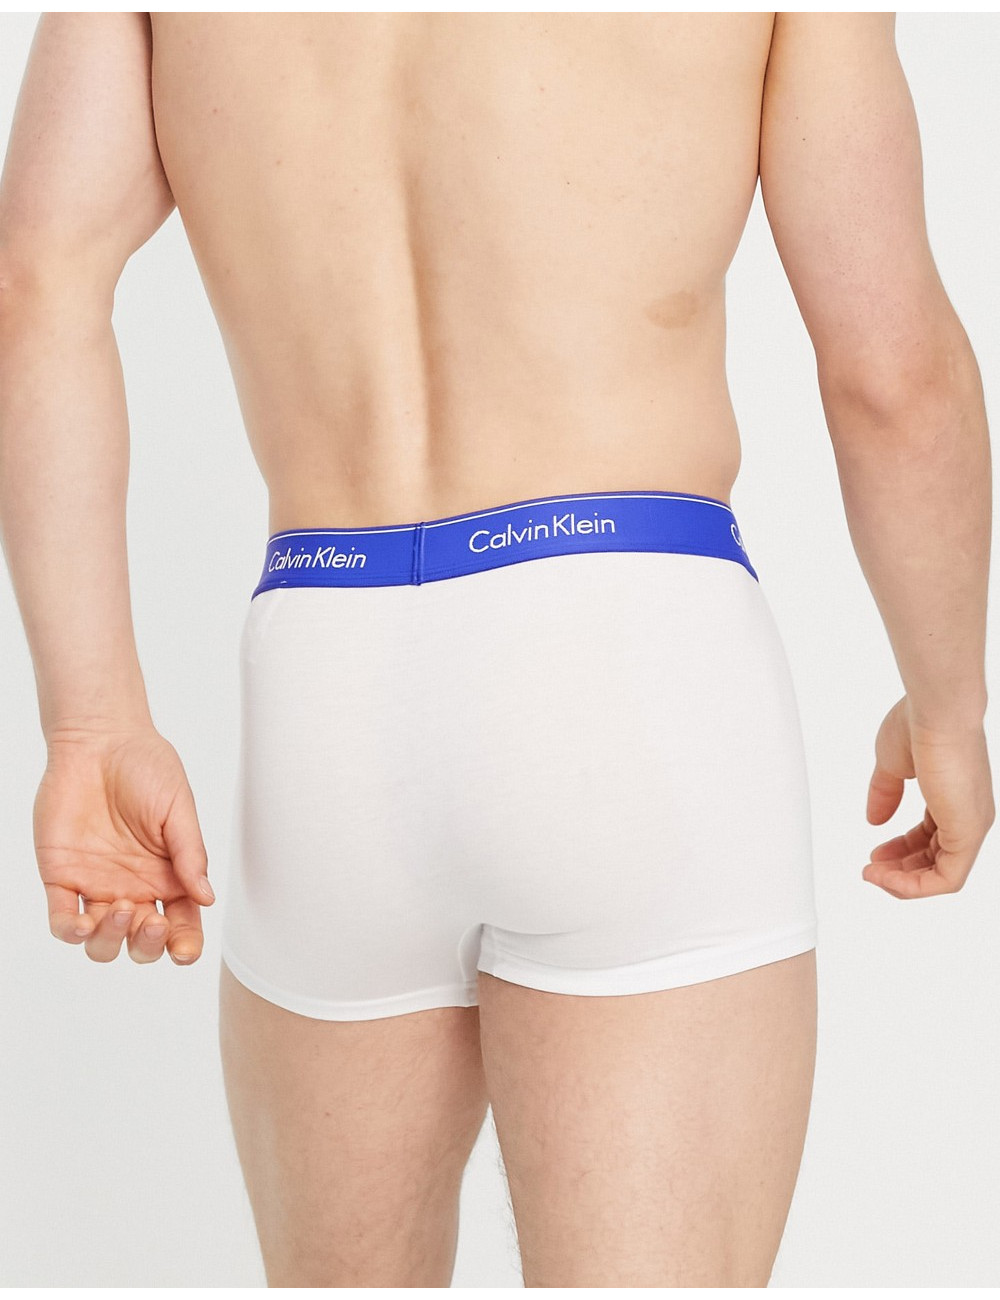 Calvin Klein trunks in white